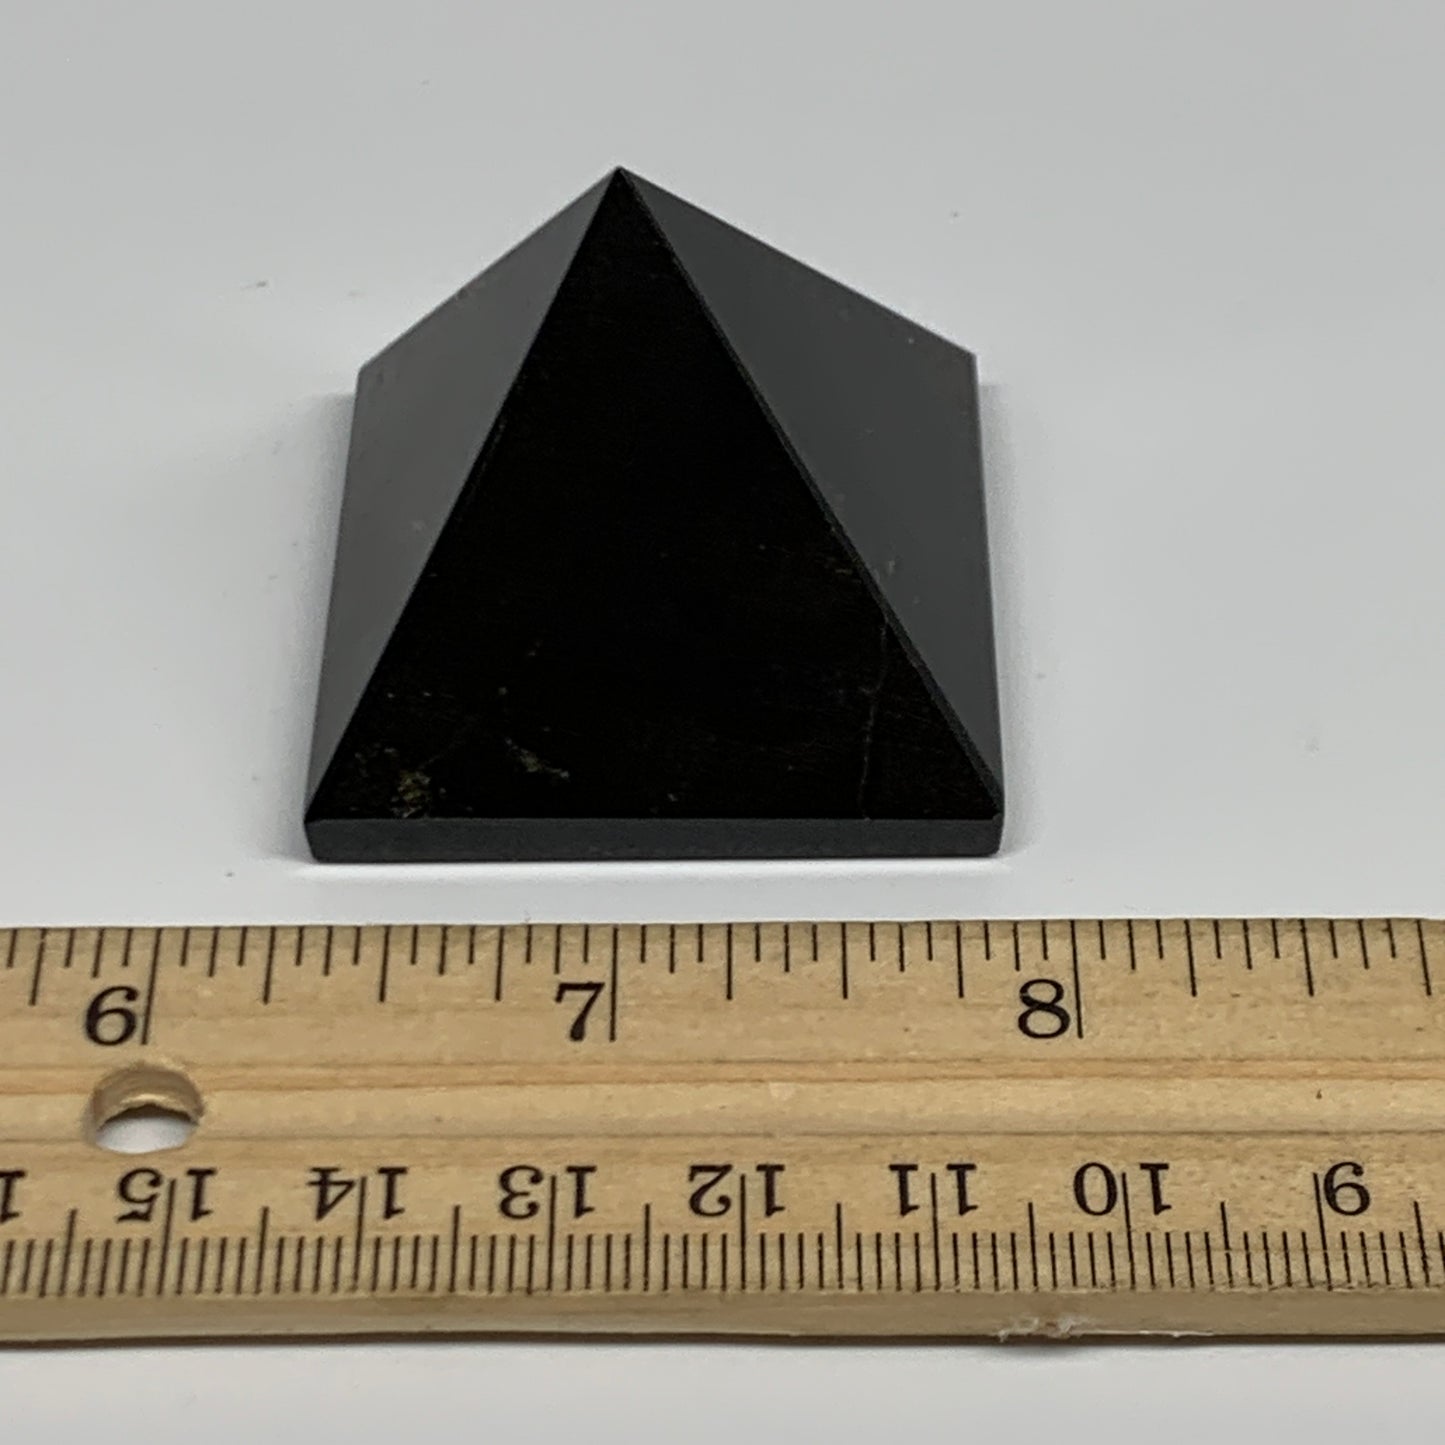 68.2g, 1.3"x1.5"x1.6", Black Tourmaline Pyramid Gemstone,Healing Crystal, B31838